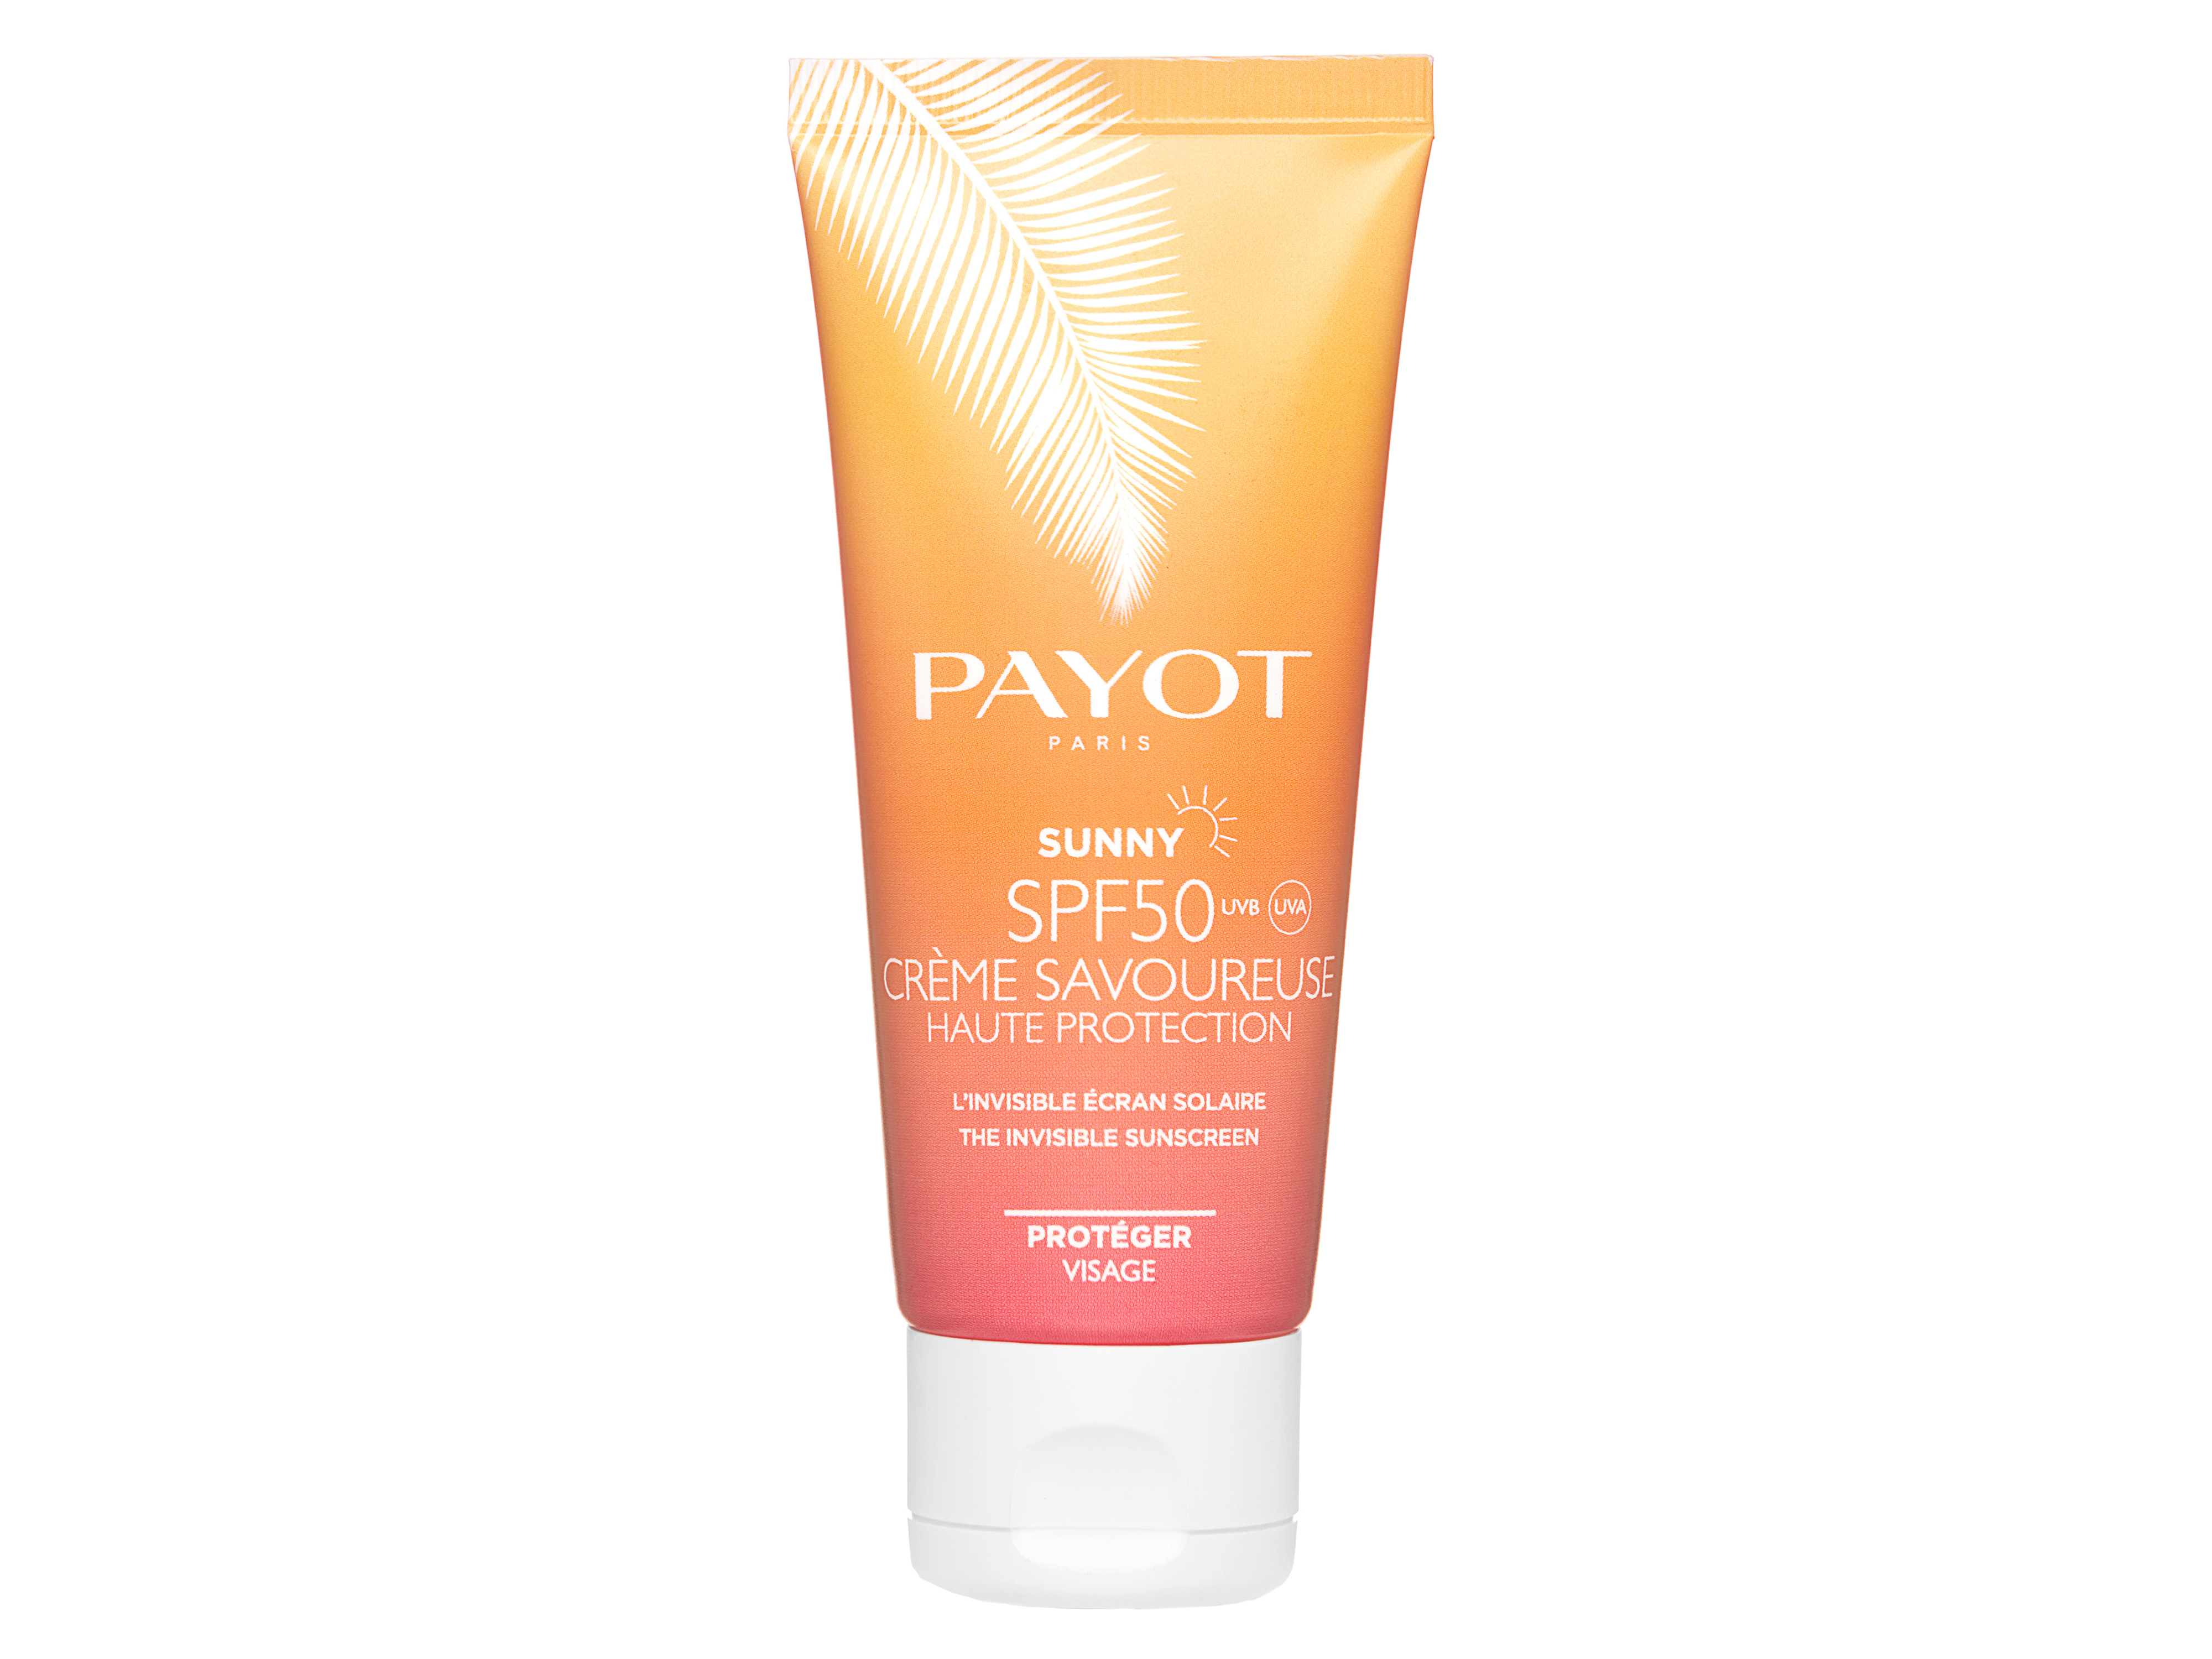 Payot Sunny Crème Savoureuse Face, SPF 50, 50 ml